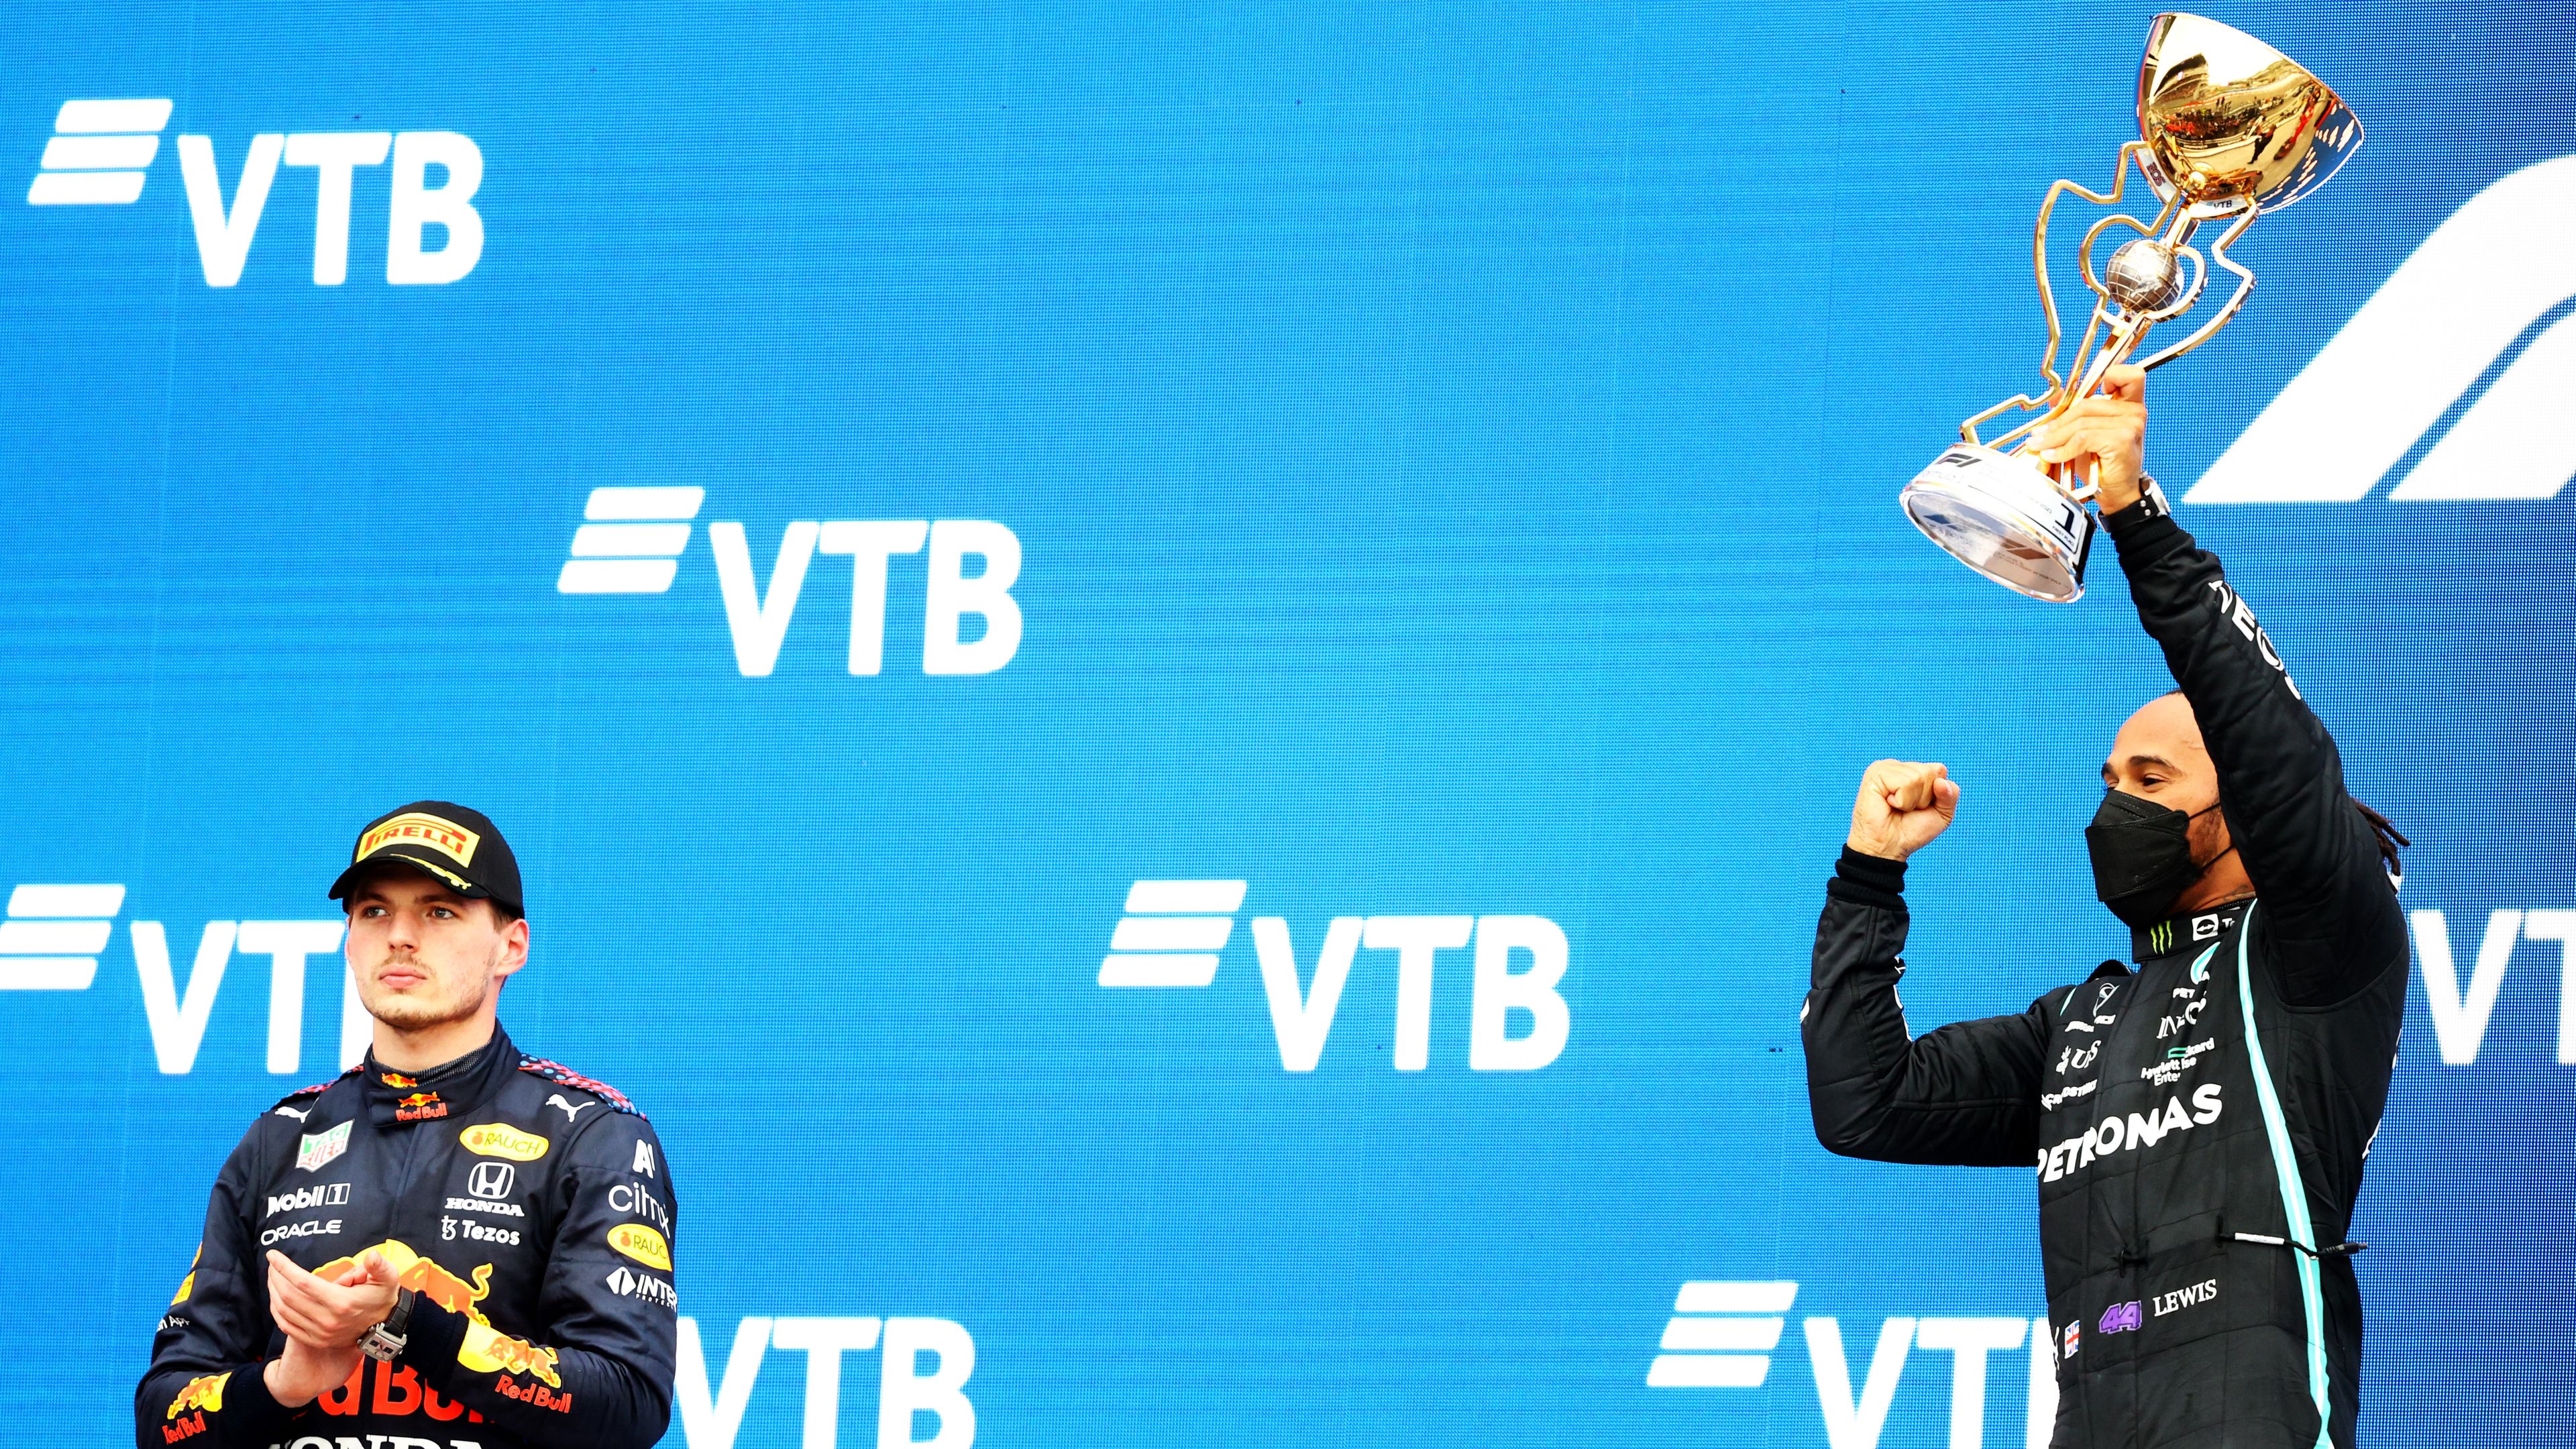 Hamilton-Verstappen's Formula 1 duel hits the track in Texas